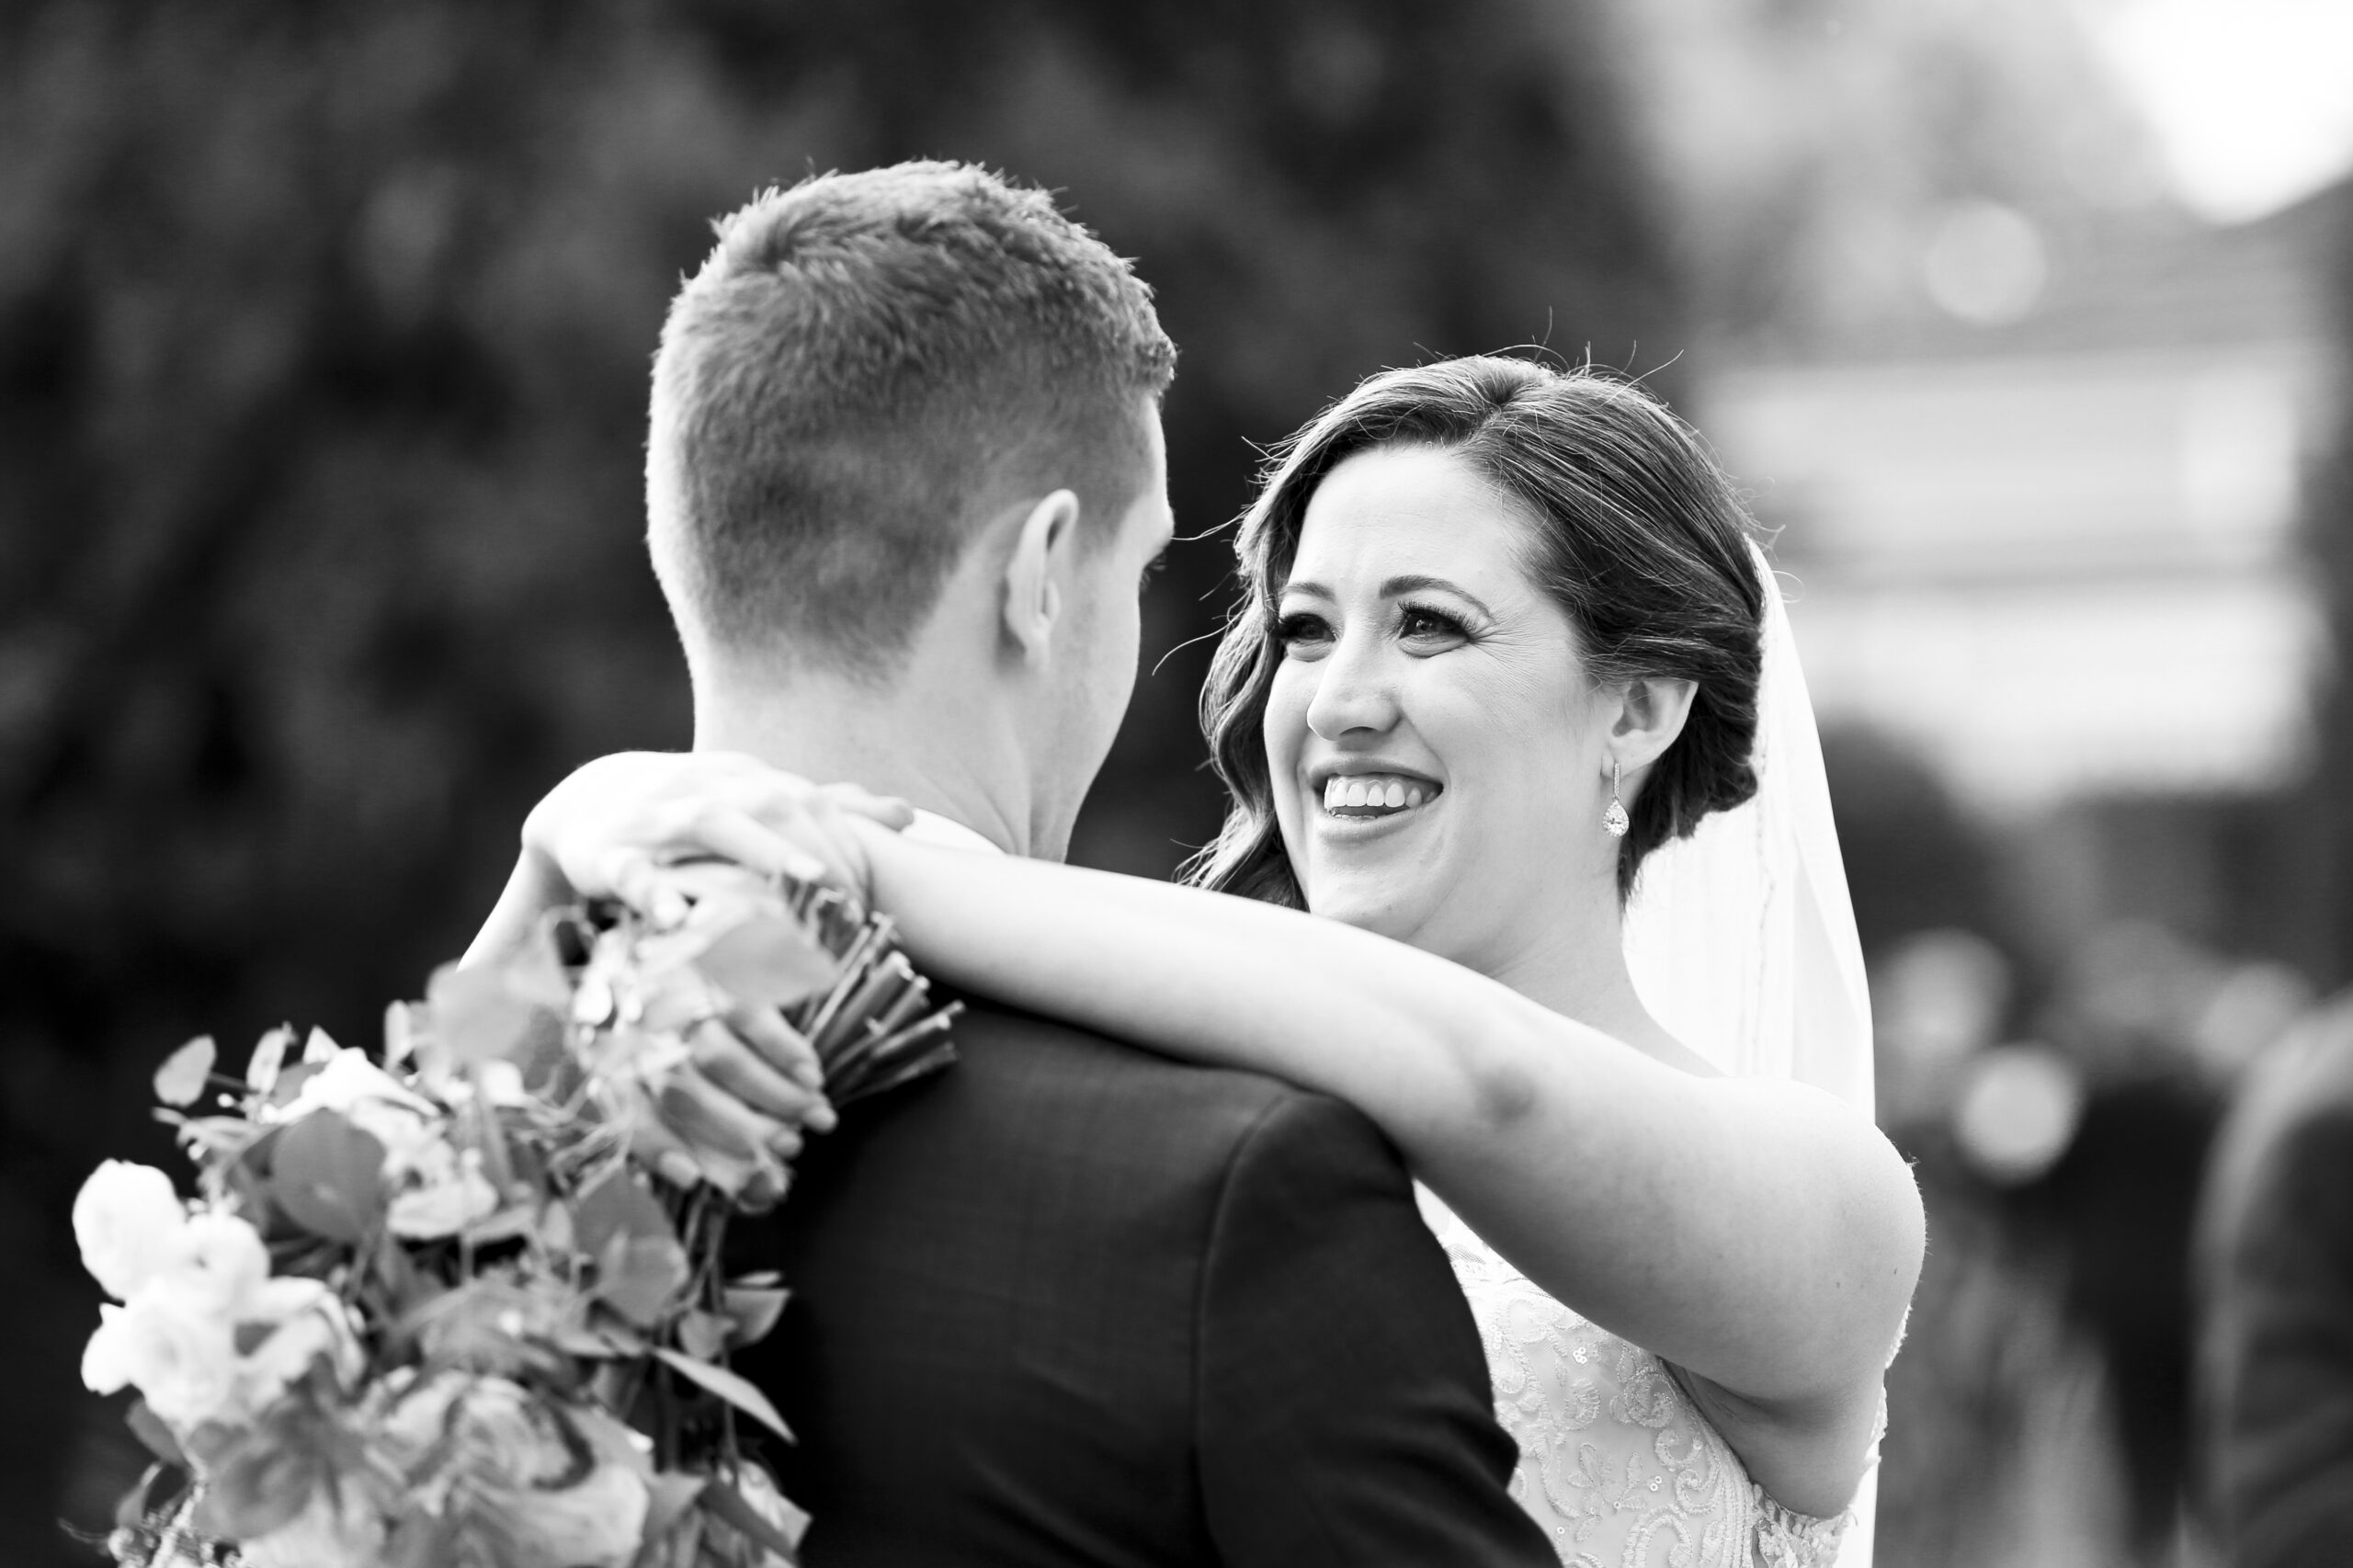 Tiffany and Ryan feel the love at romantic garden wedding | Easy Weddings